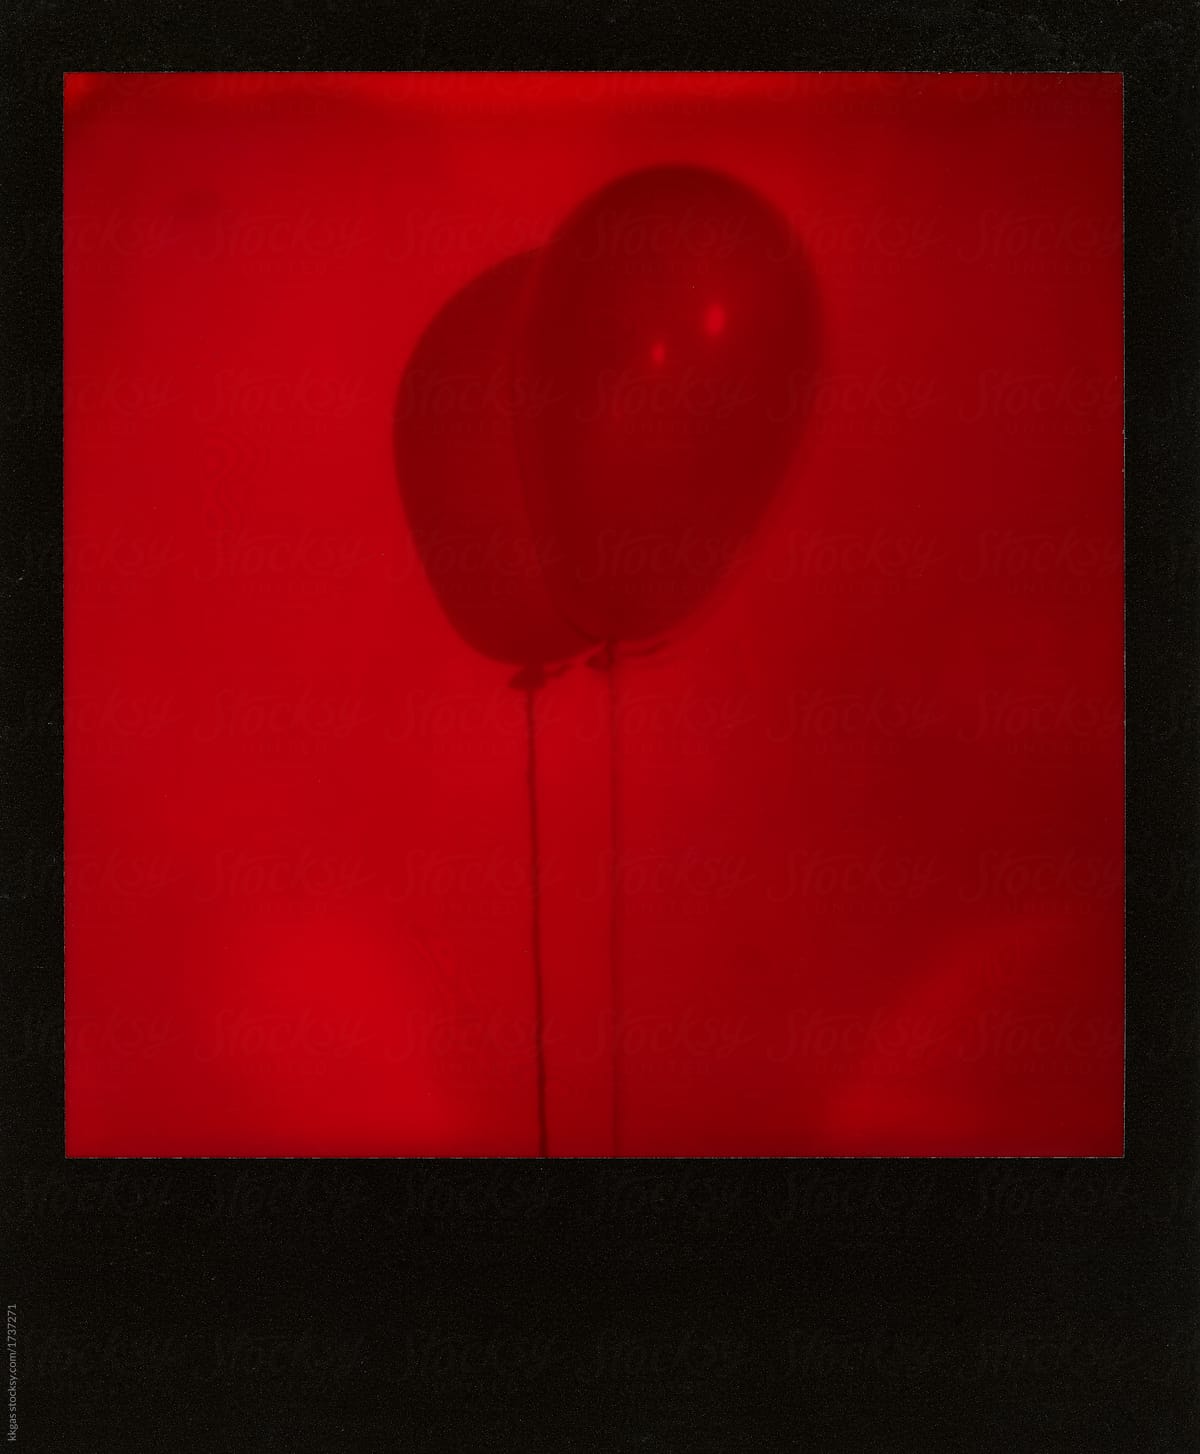 Red polaroid scan of a balloon